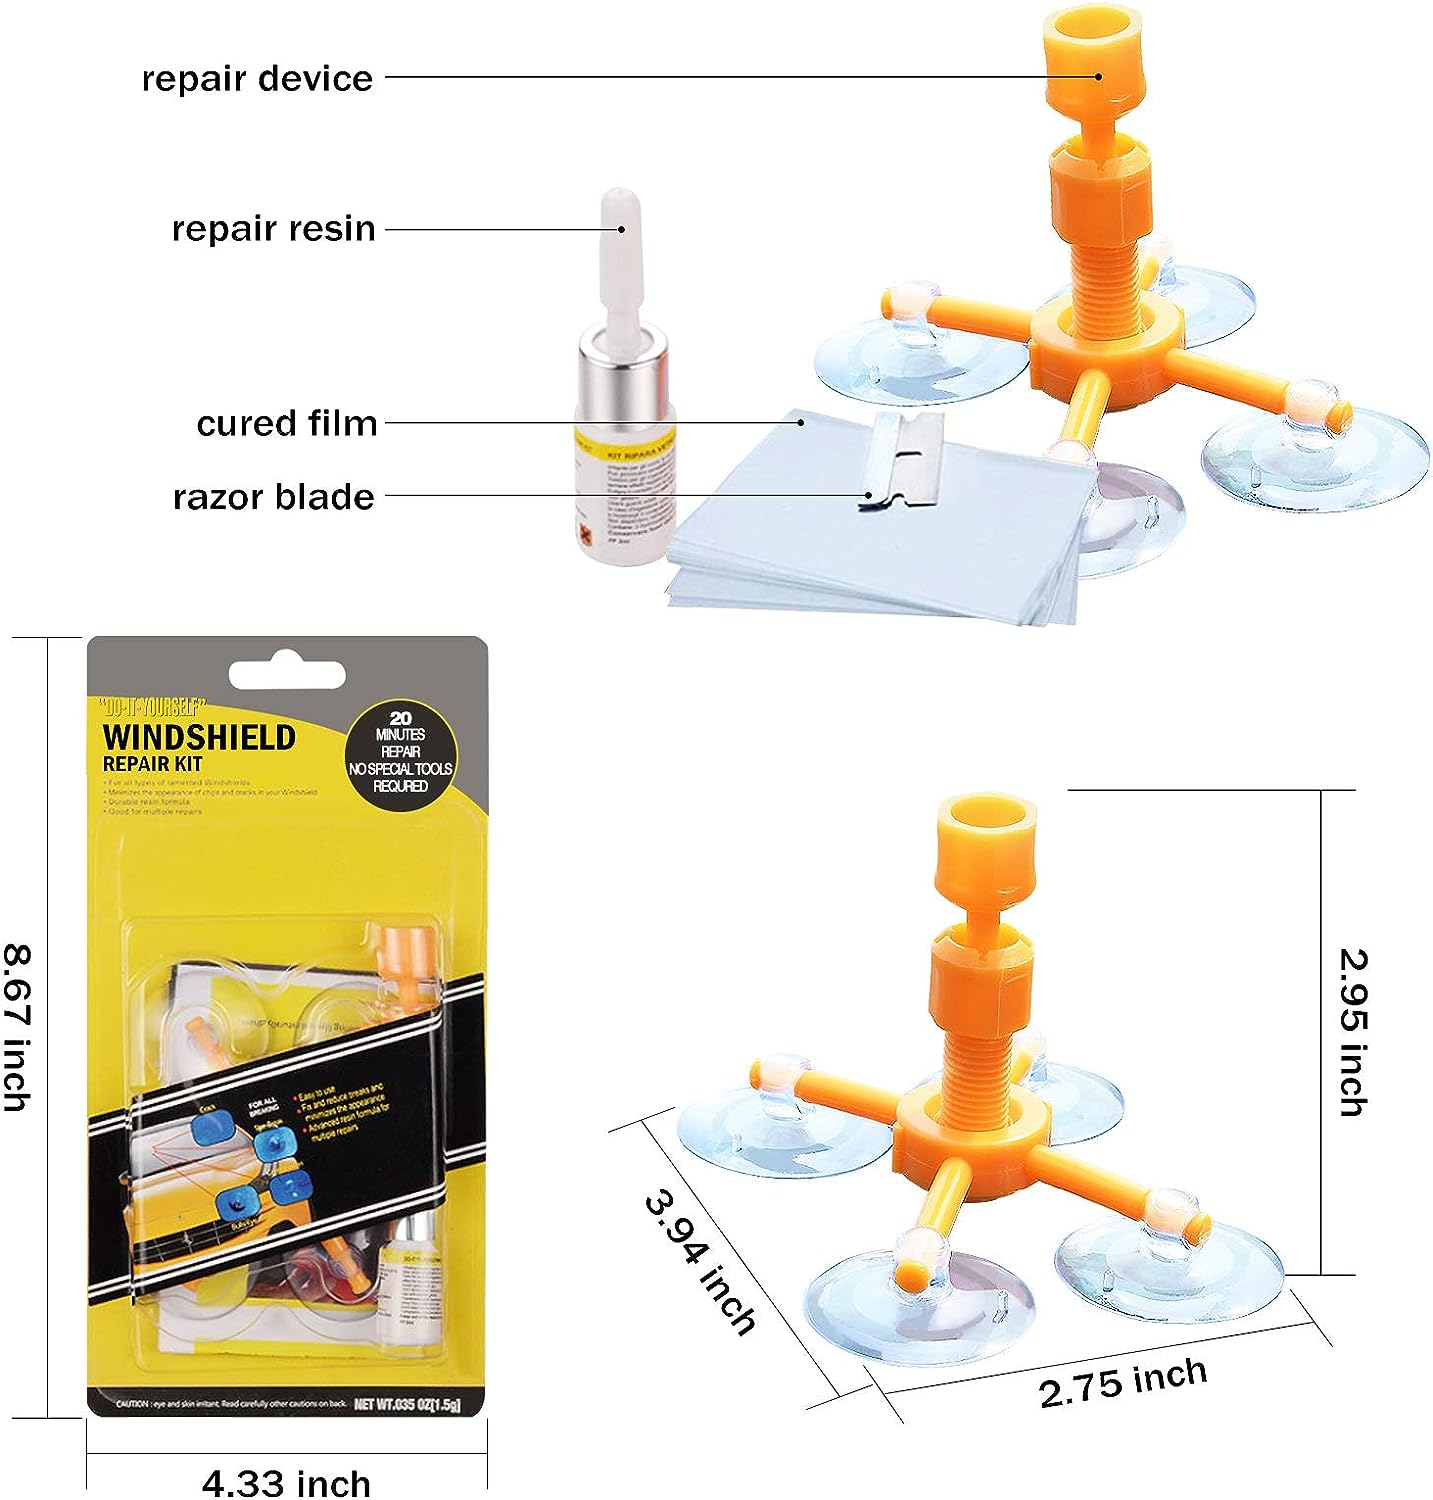 Windshield glass repair kit - 1630102 - 160775